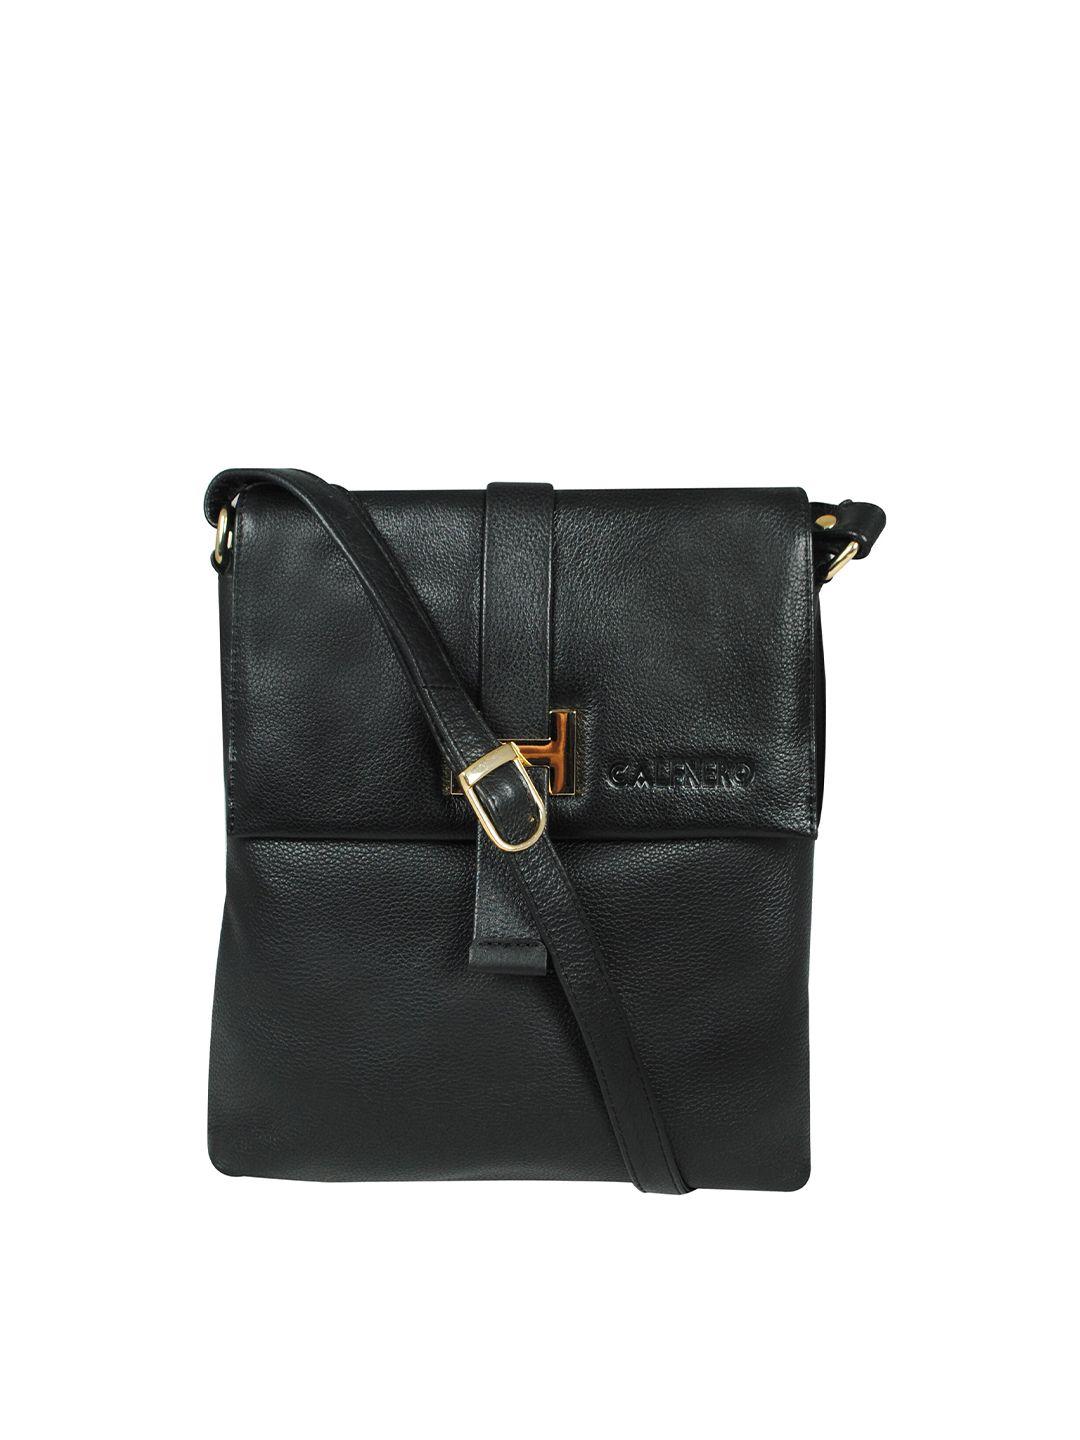 calfnero black leather structured sling bag